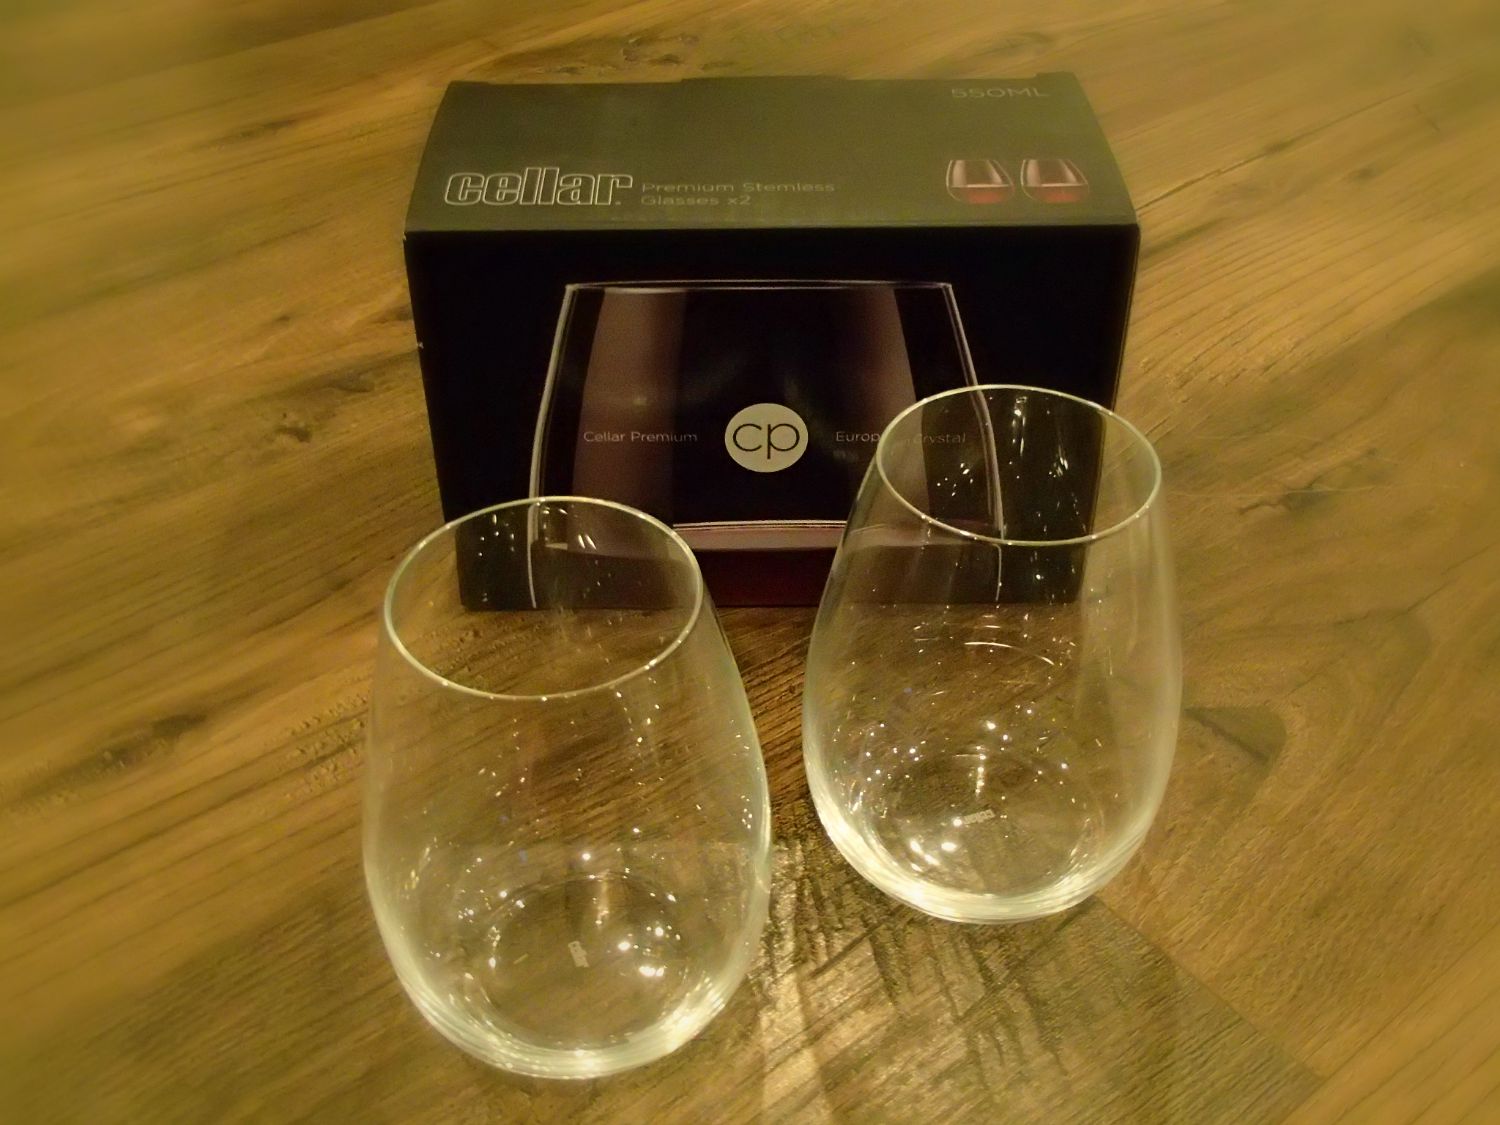 Cellar Premium Stemless Crystal wine glasses.jpg